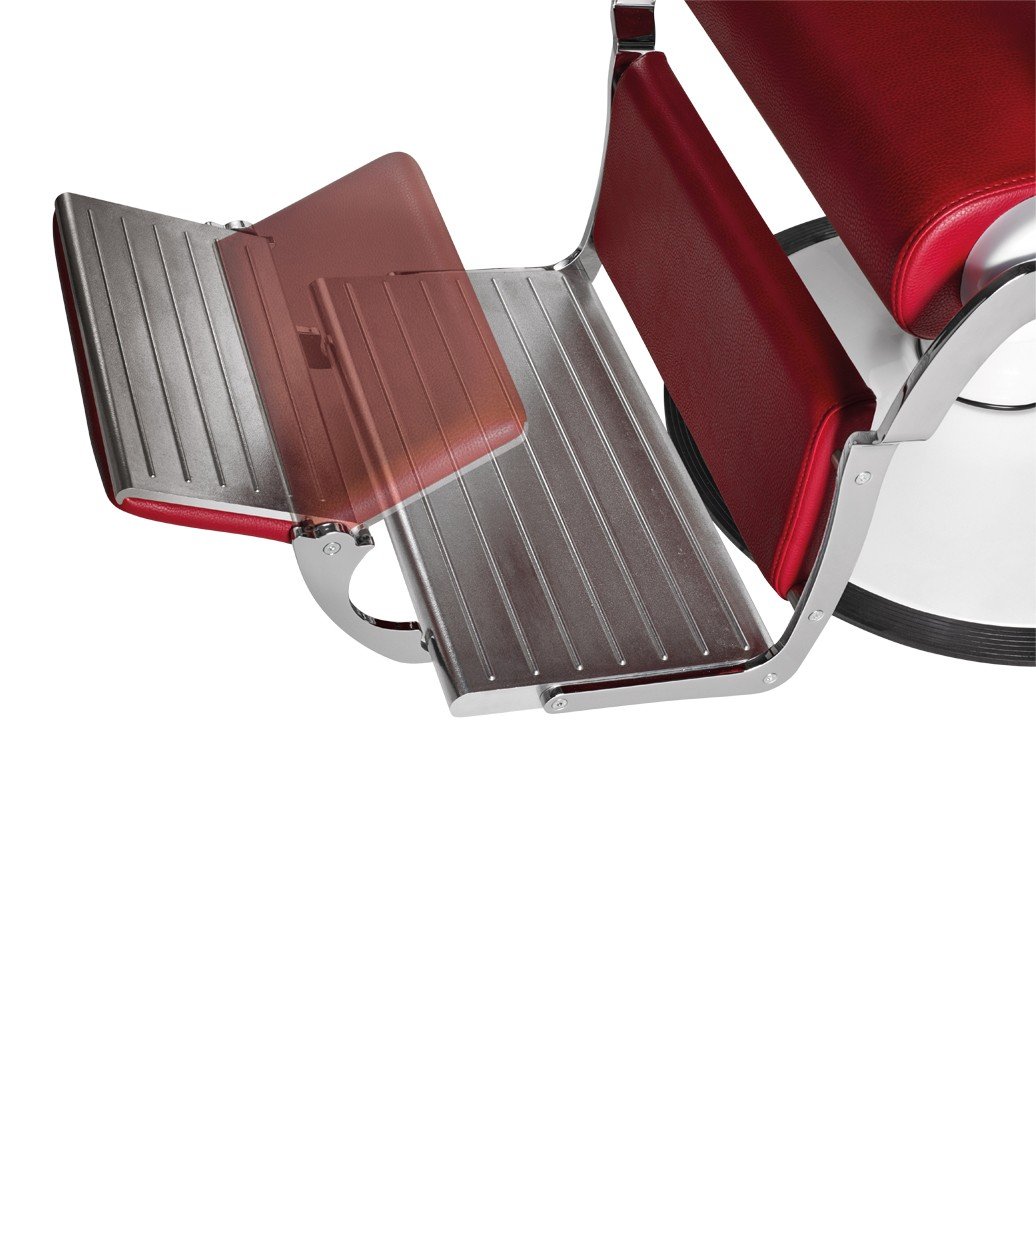 Salon Ambience SH277-6 Premier Italian Barber Chair